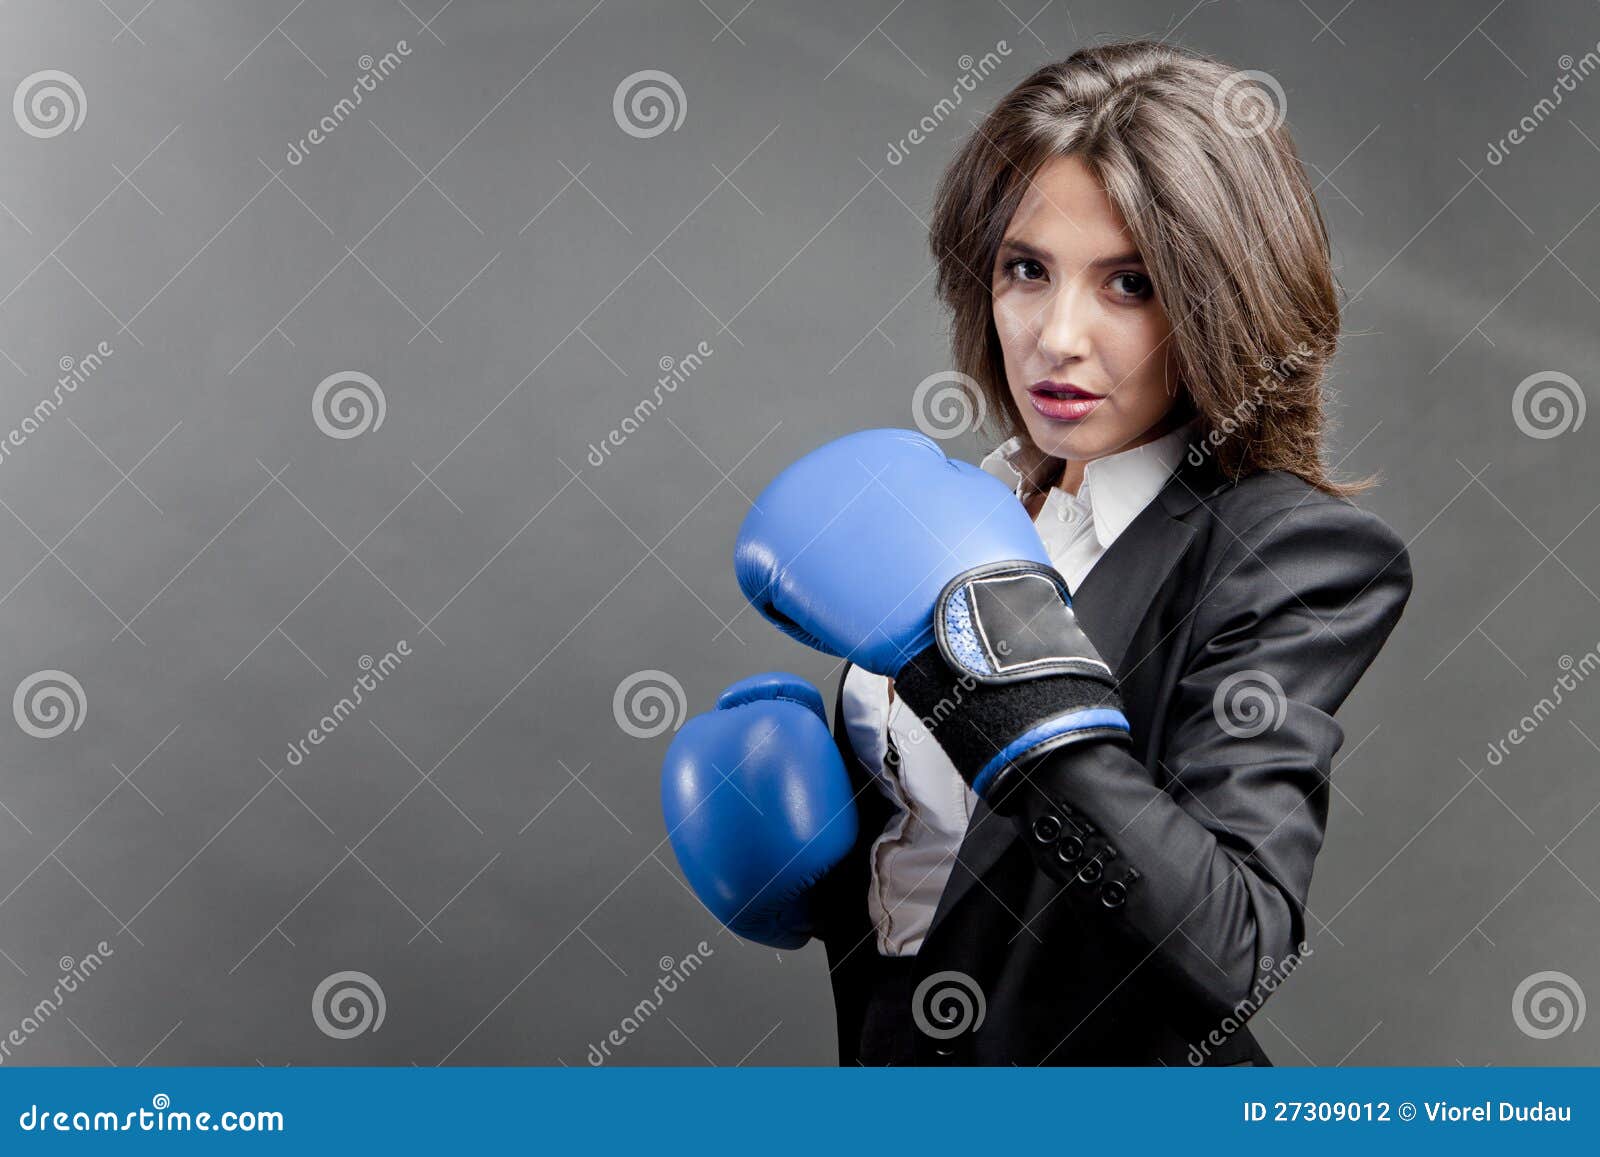 aggressive business woman